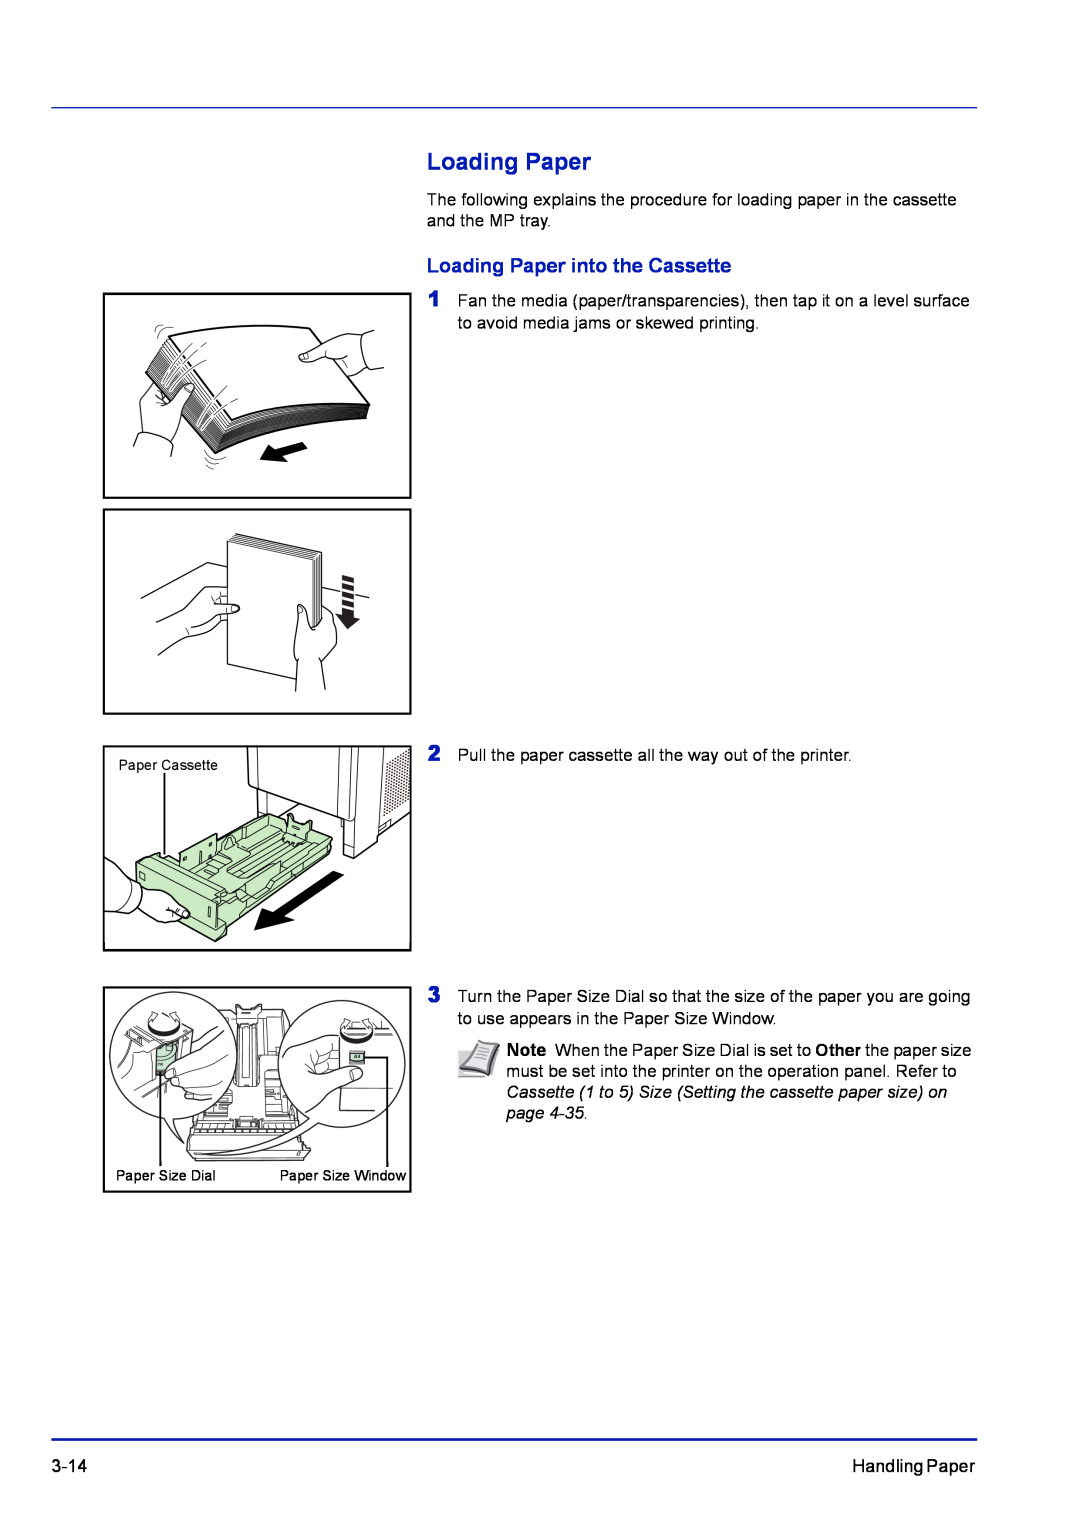 Kyocera FS-C5400DN, FS-1300D, FS-1100 manual Loading Paper into the Cassette 